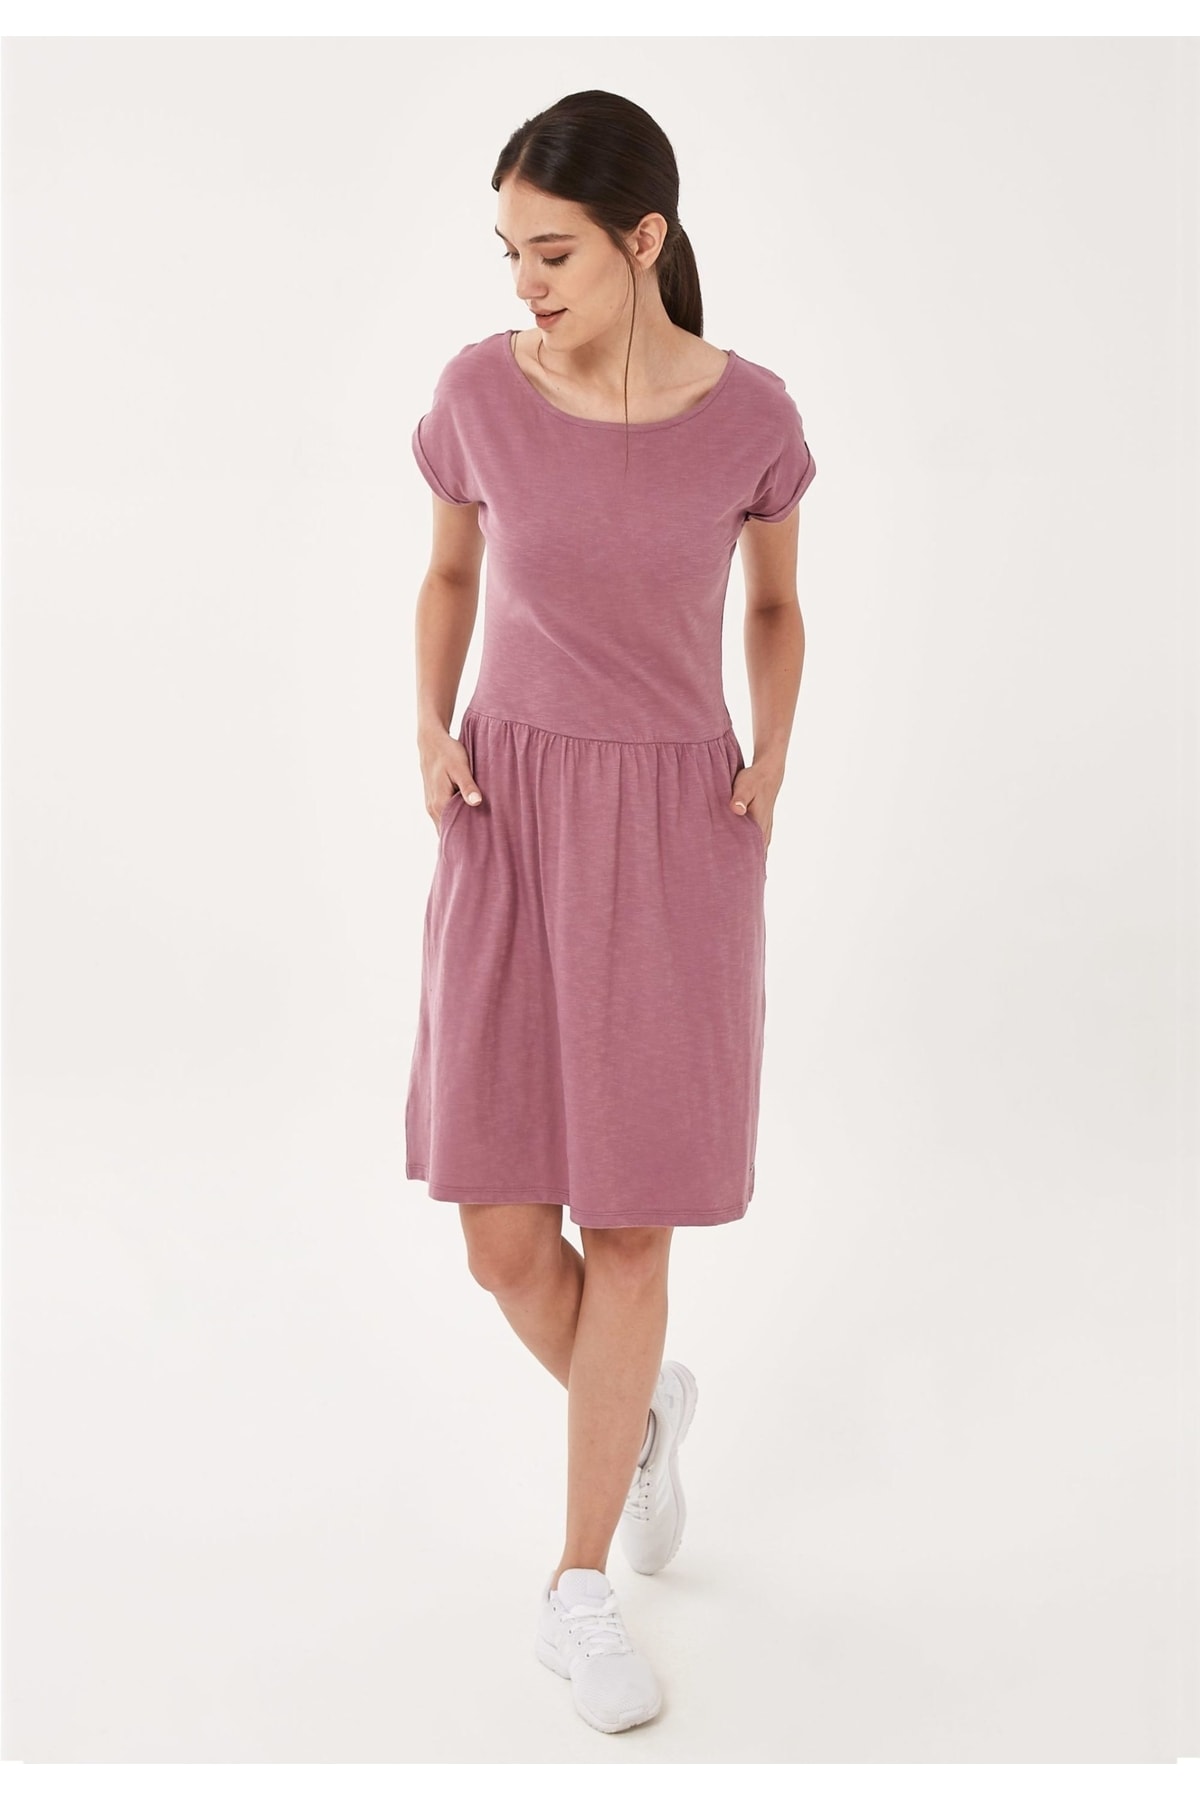 ORGANICATION Kleid Lila Basic Fast ausverkauft